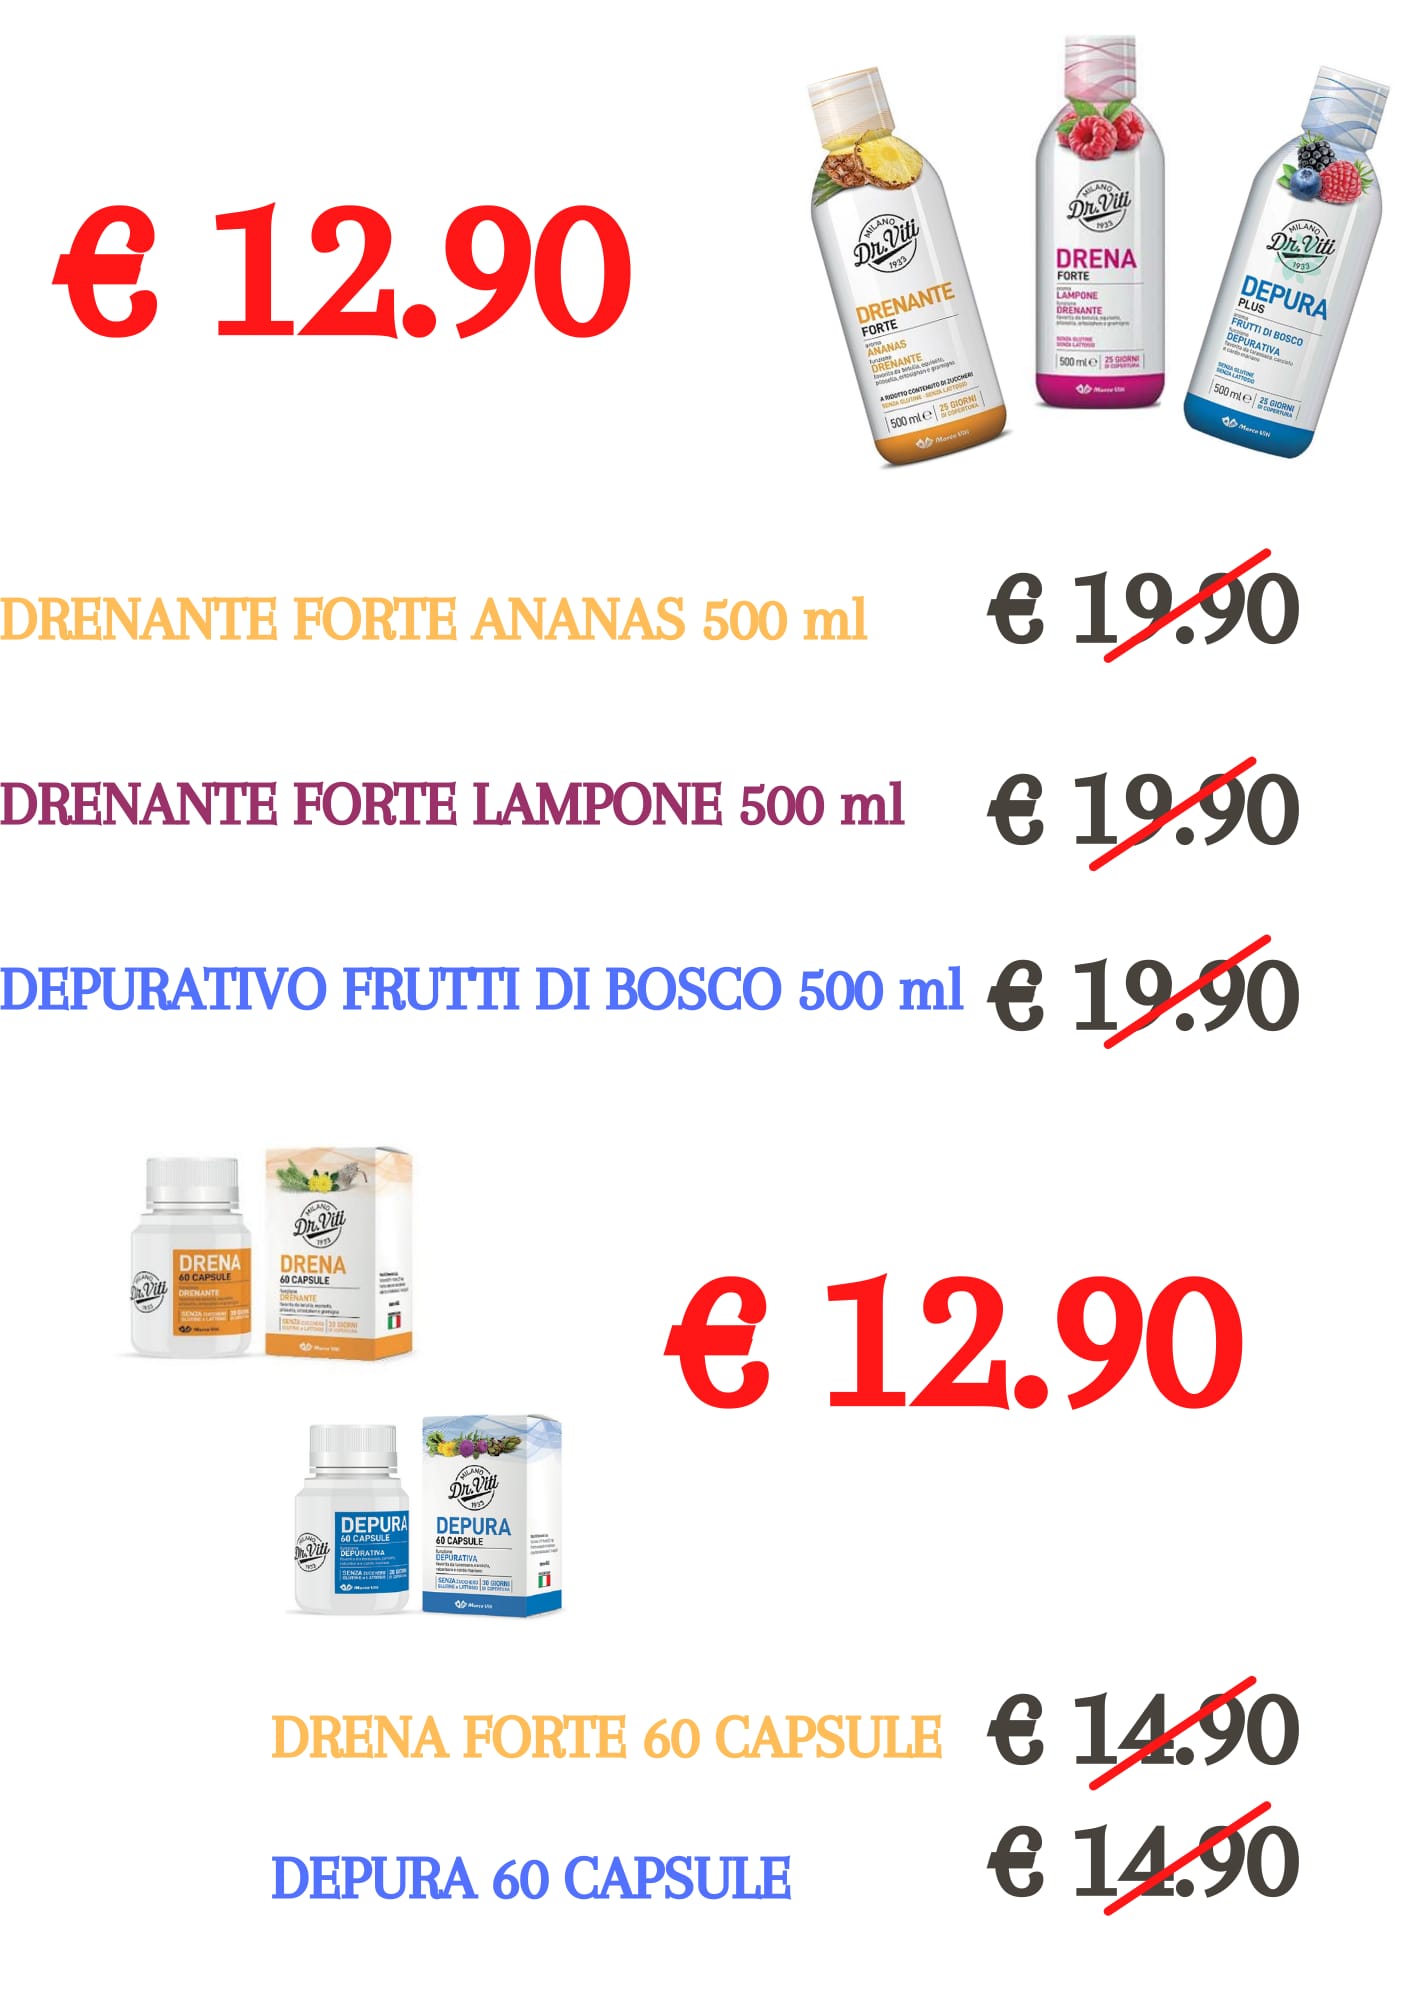 Farmacia San Giuseppe Villa Pozzoni